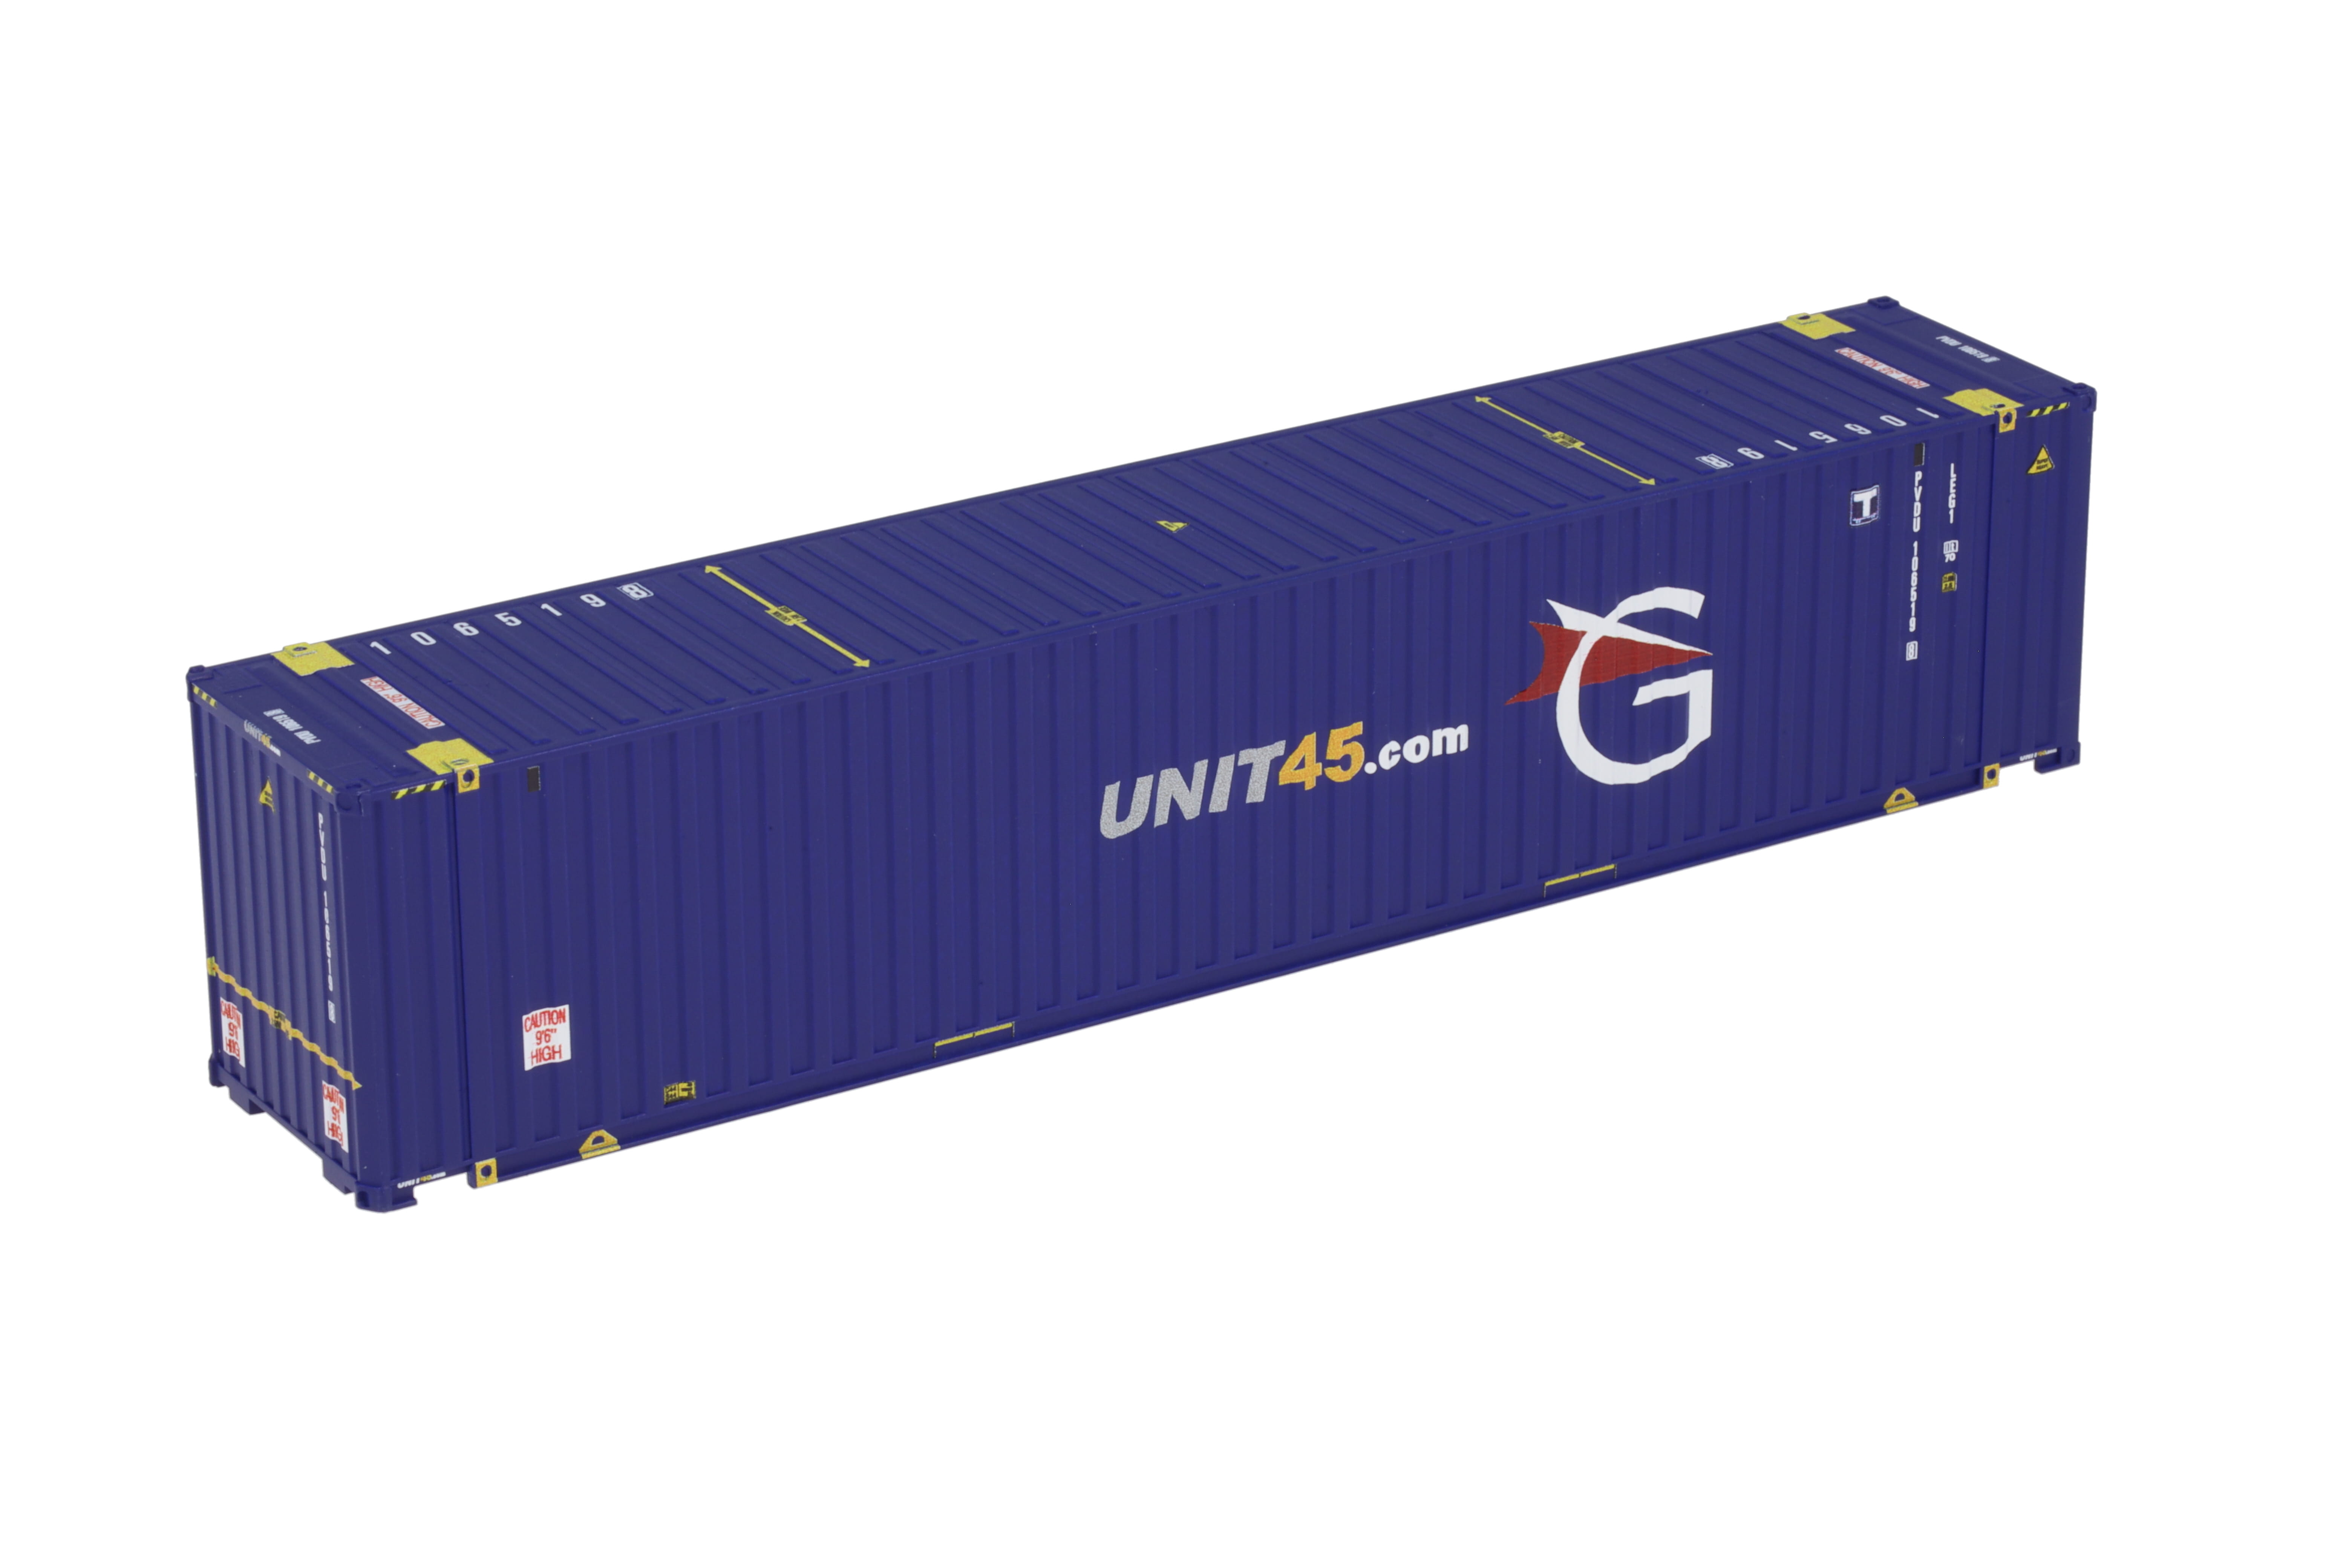 1:87 45´ Container UNIT45 mit Zusatzlogo "Gopet Trans", WB-A HC (Euro), # PVDU 106519